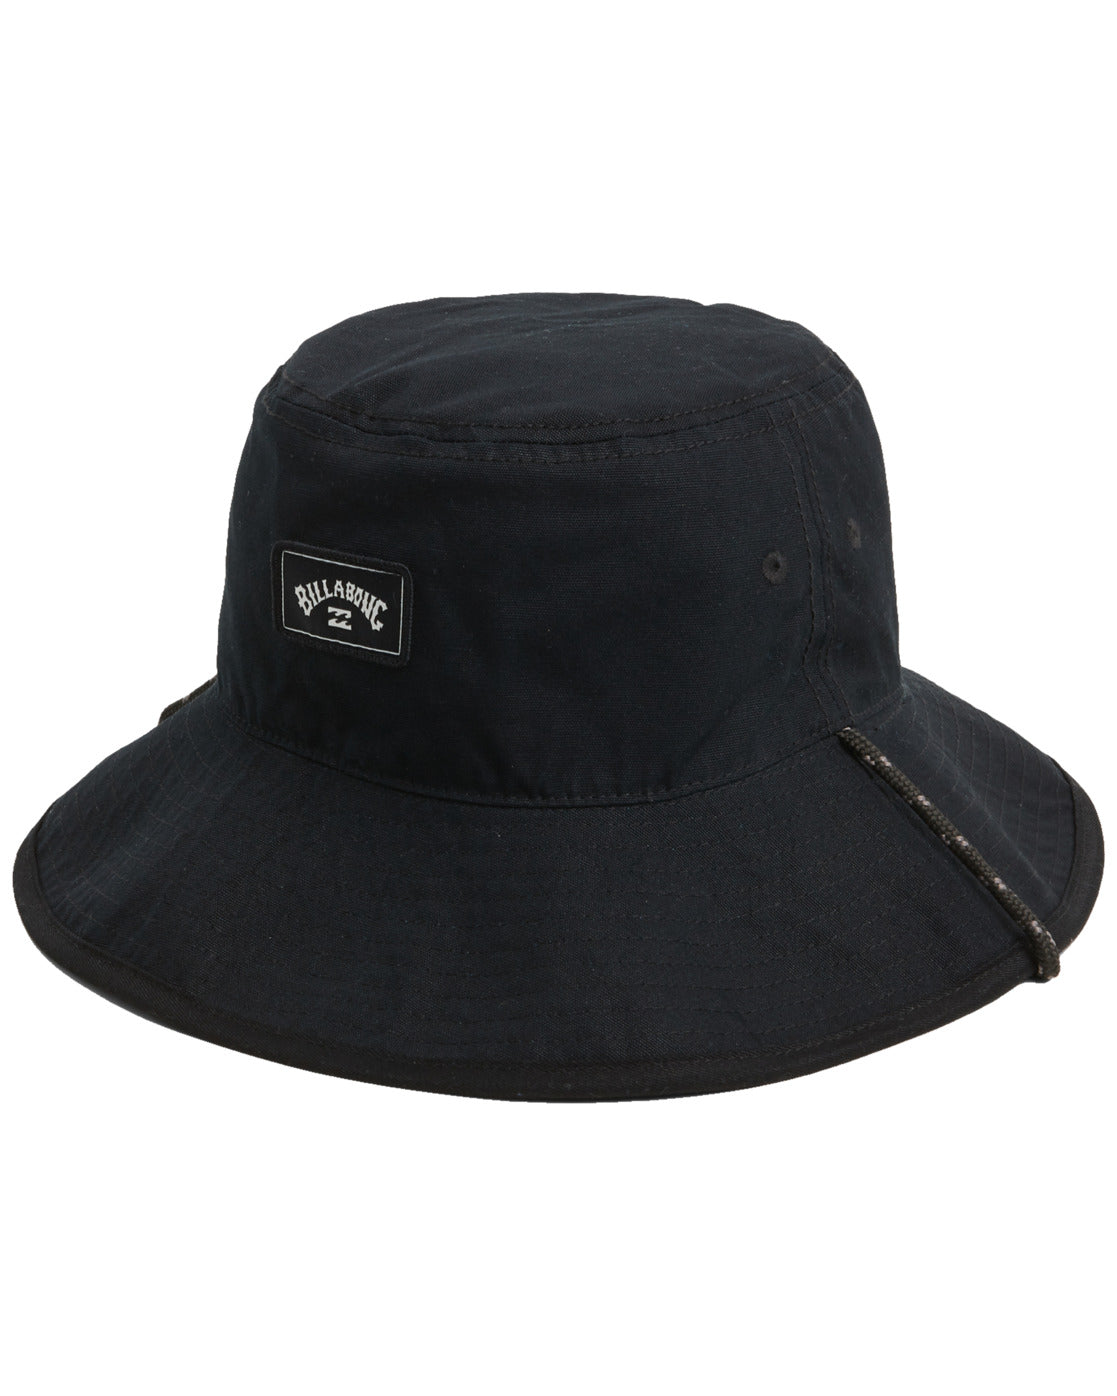 Billabong Boys Division Reversible Hat - Black/Camo